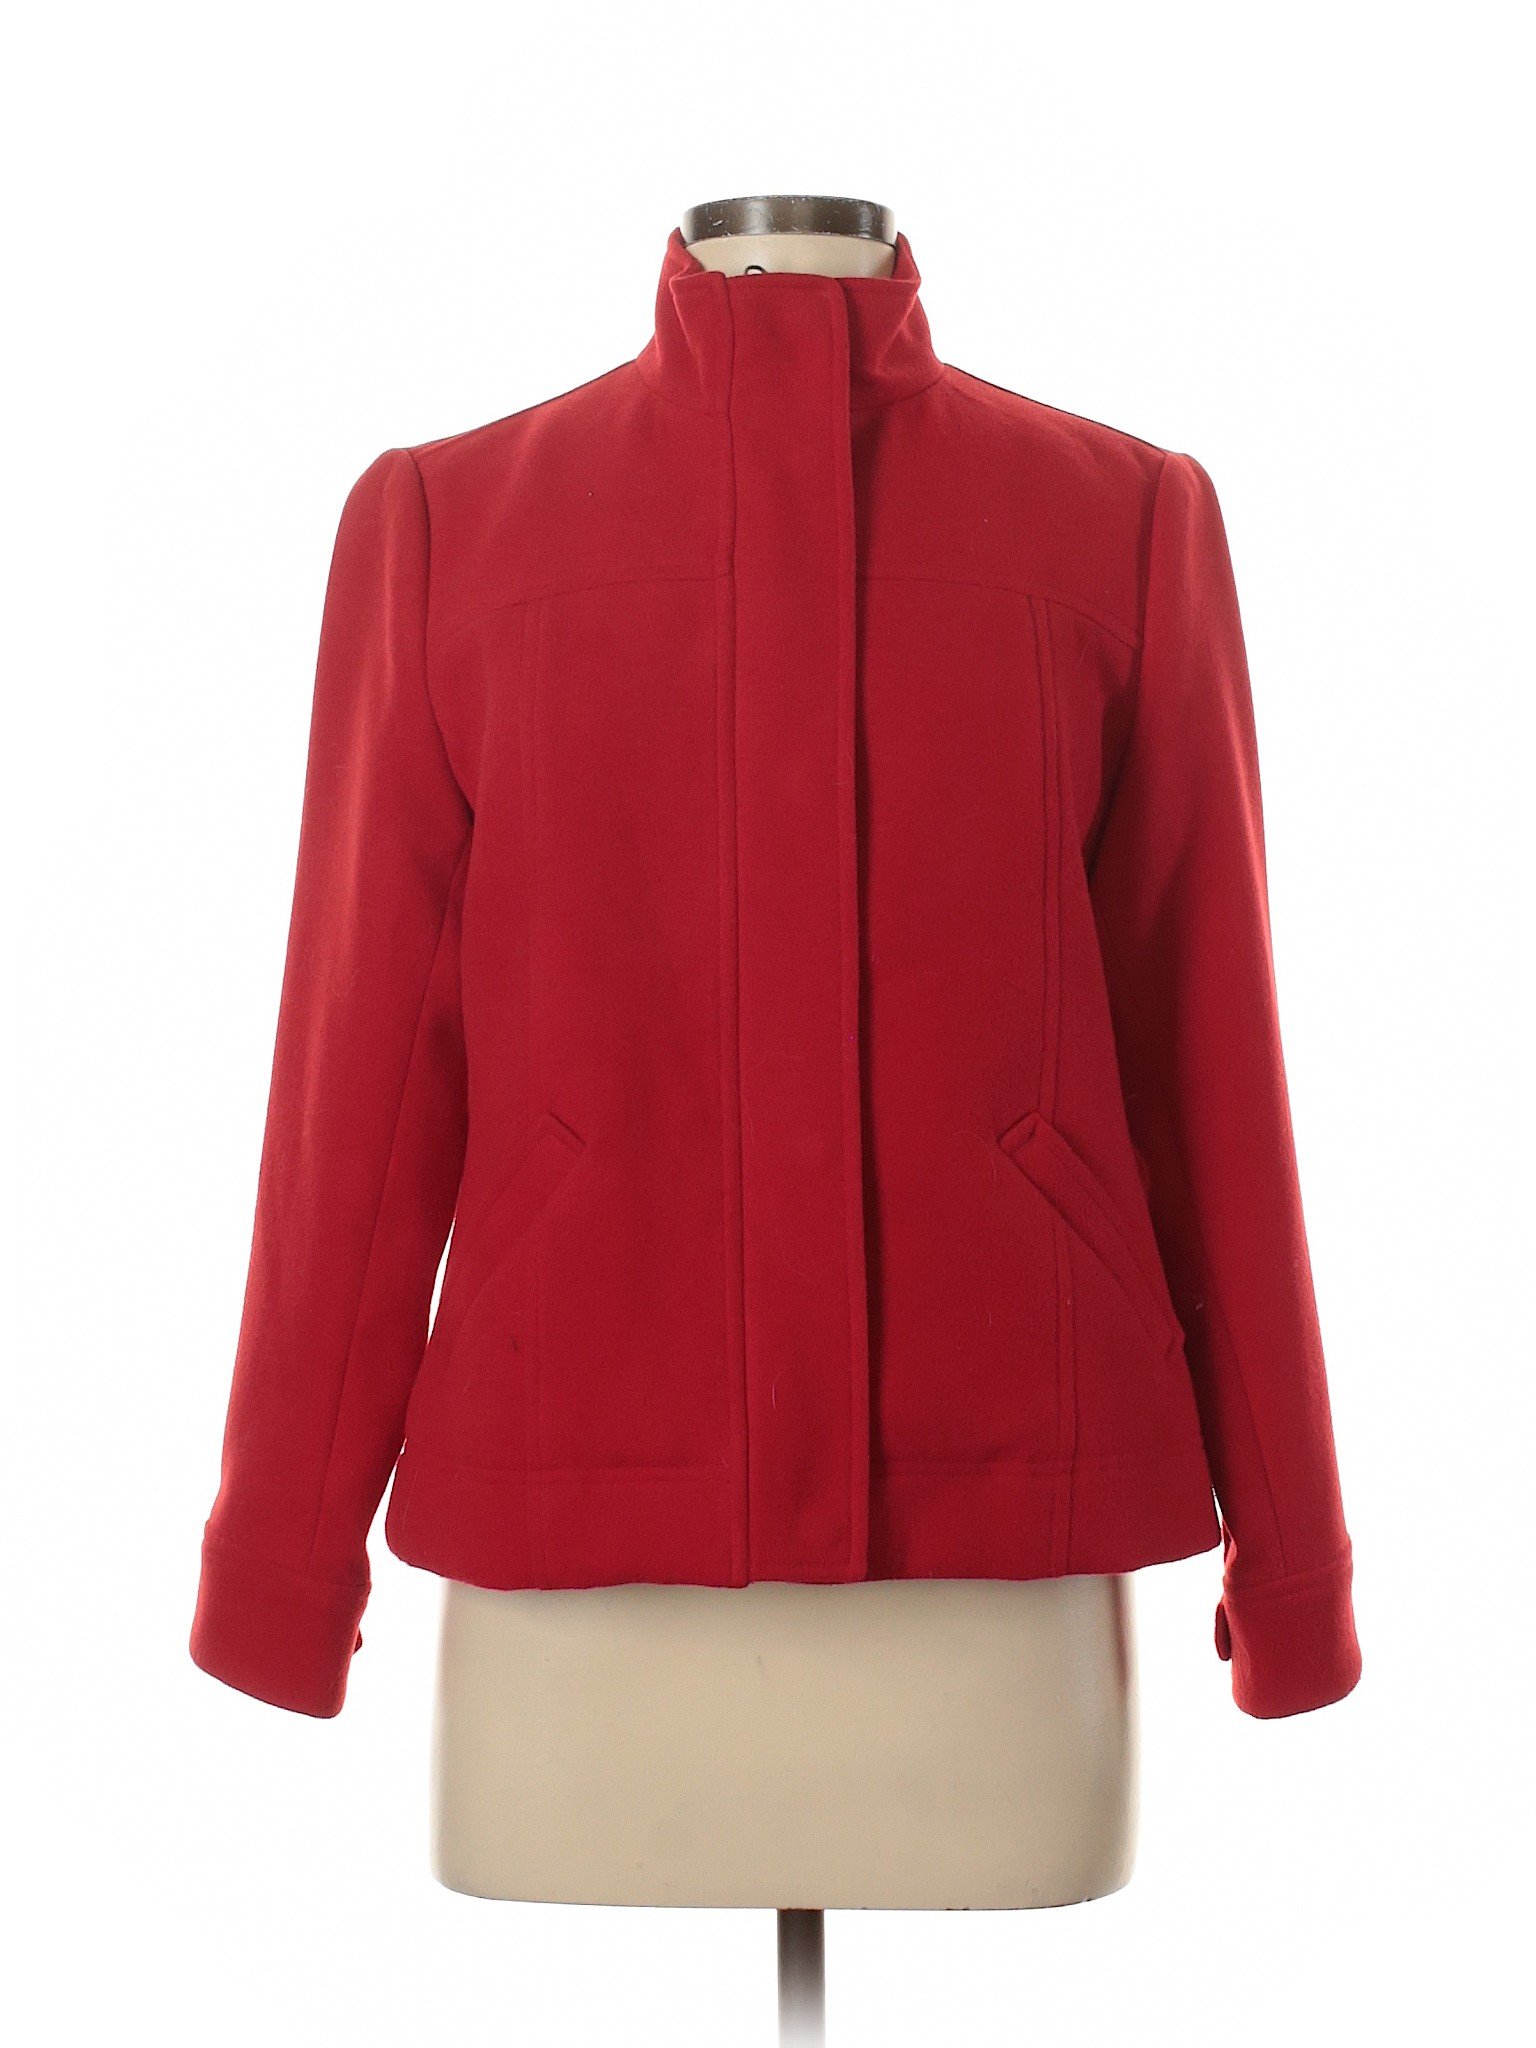 Coldwater Creek Women Red Coat 6 | eBay